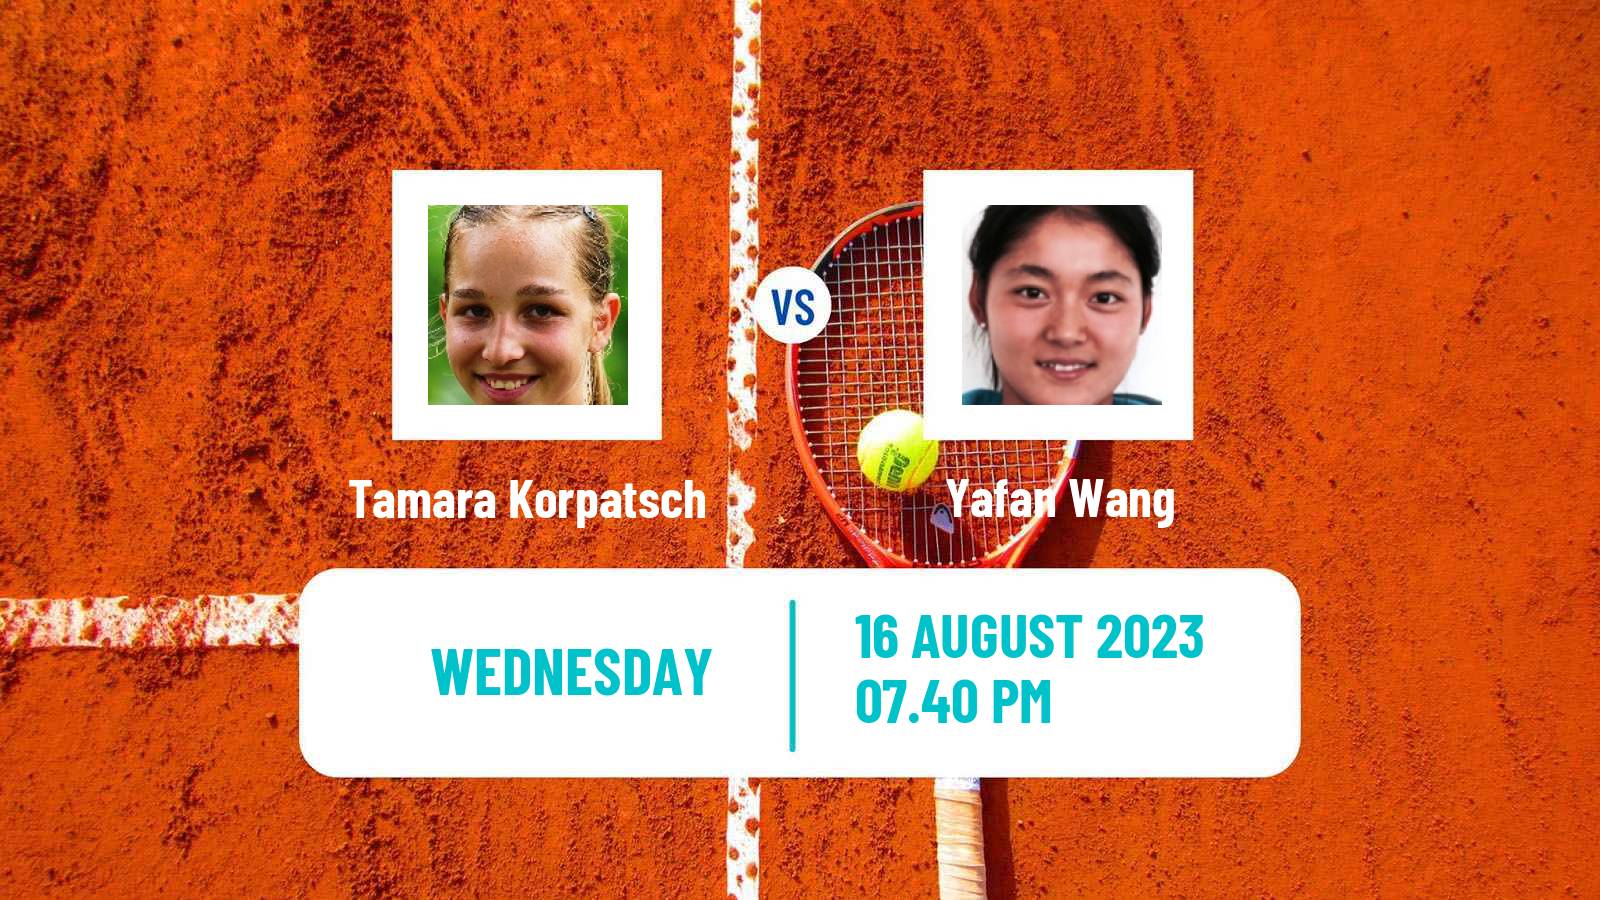 Tennis Stanford Challenger Women Tamara Korpatsch - Yafan Wang